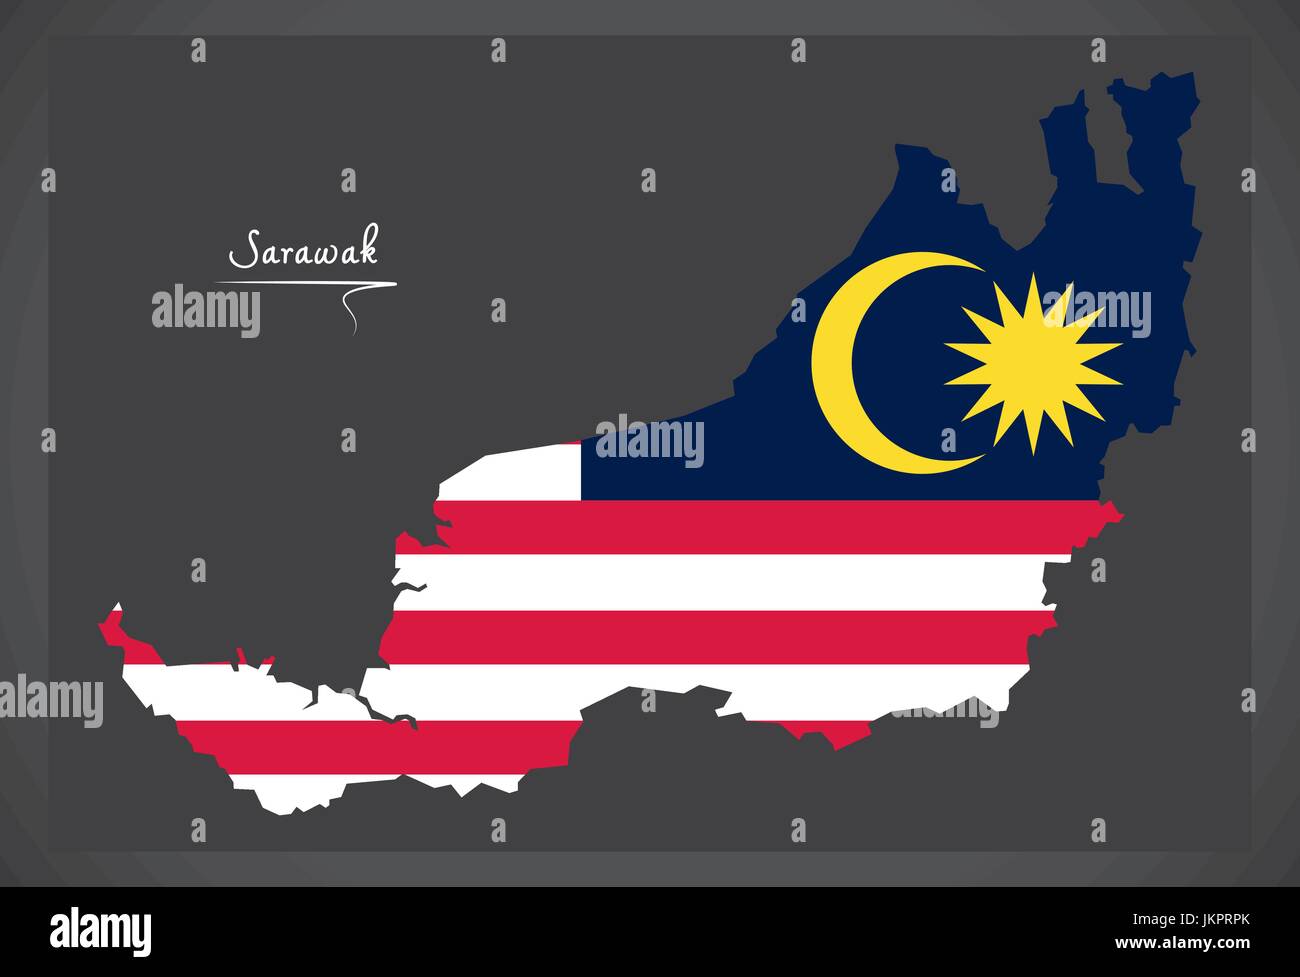 Sarawak Malaysia map with Malaysian national flag illustration Stock Vector